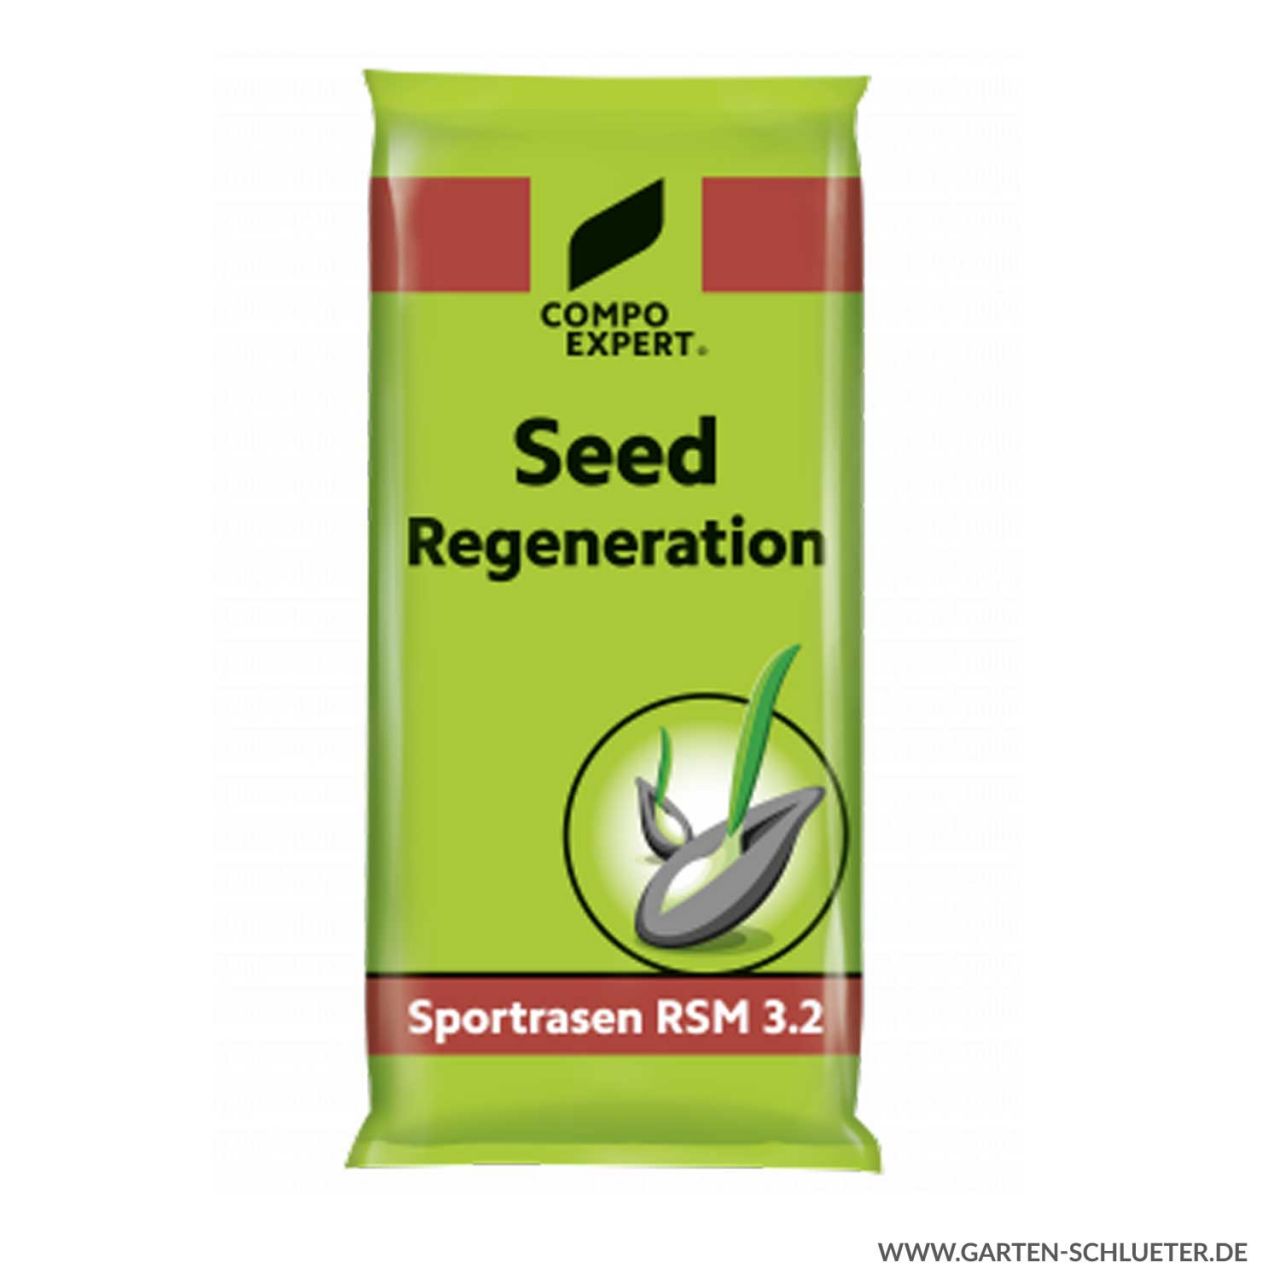 Rasensamen Regeneration - Compo Expert® Seed Regeneration1 RSM 3.2 ... von Compo Expert